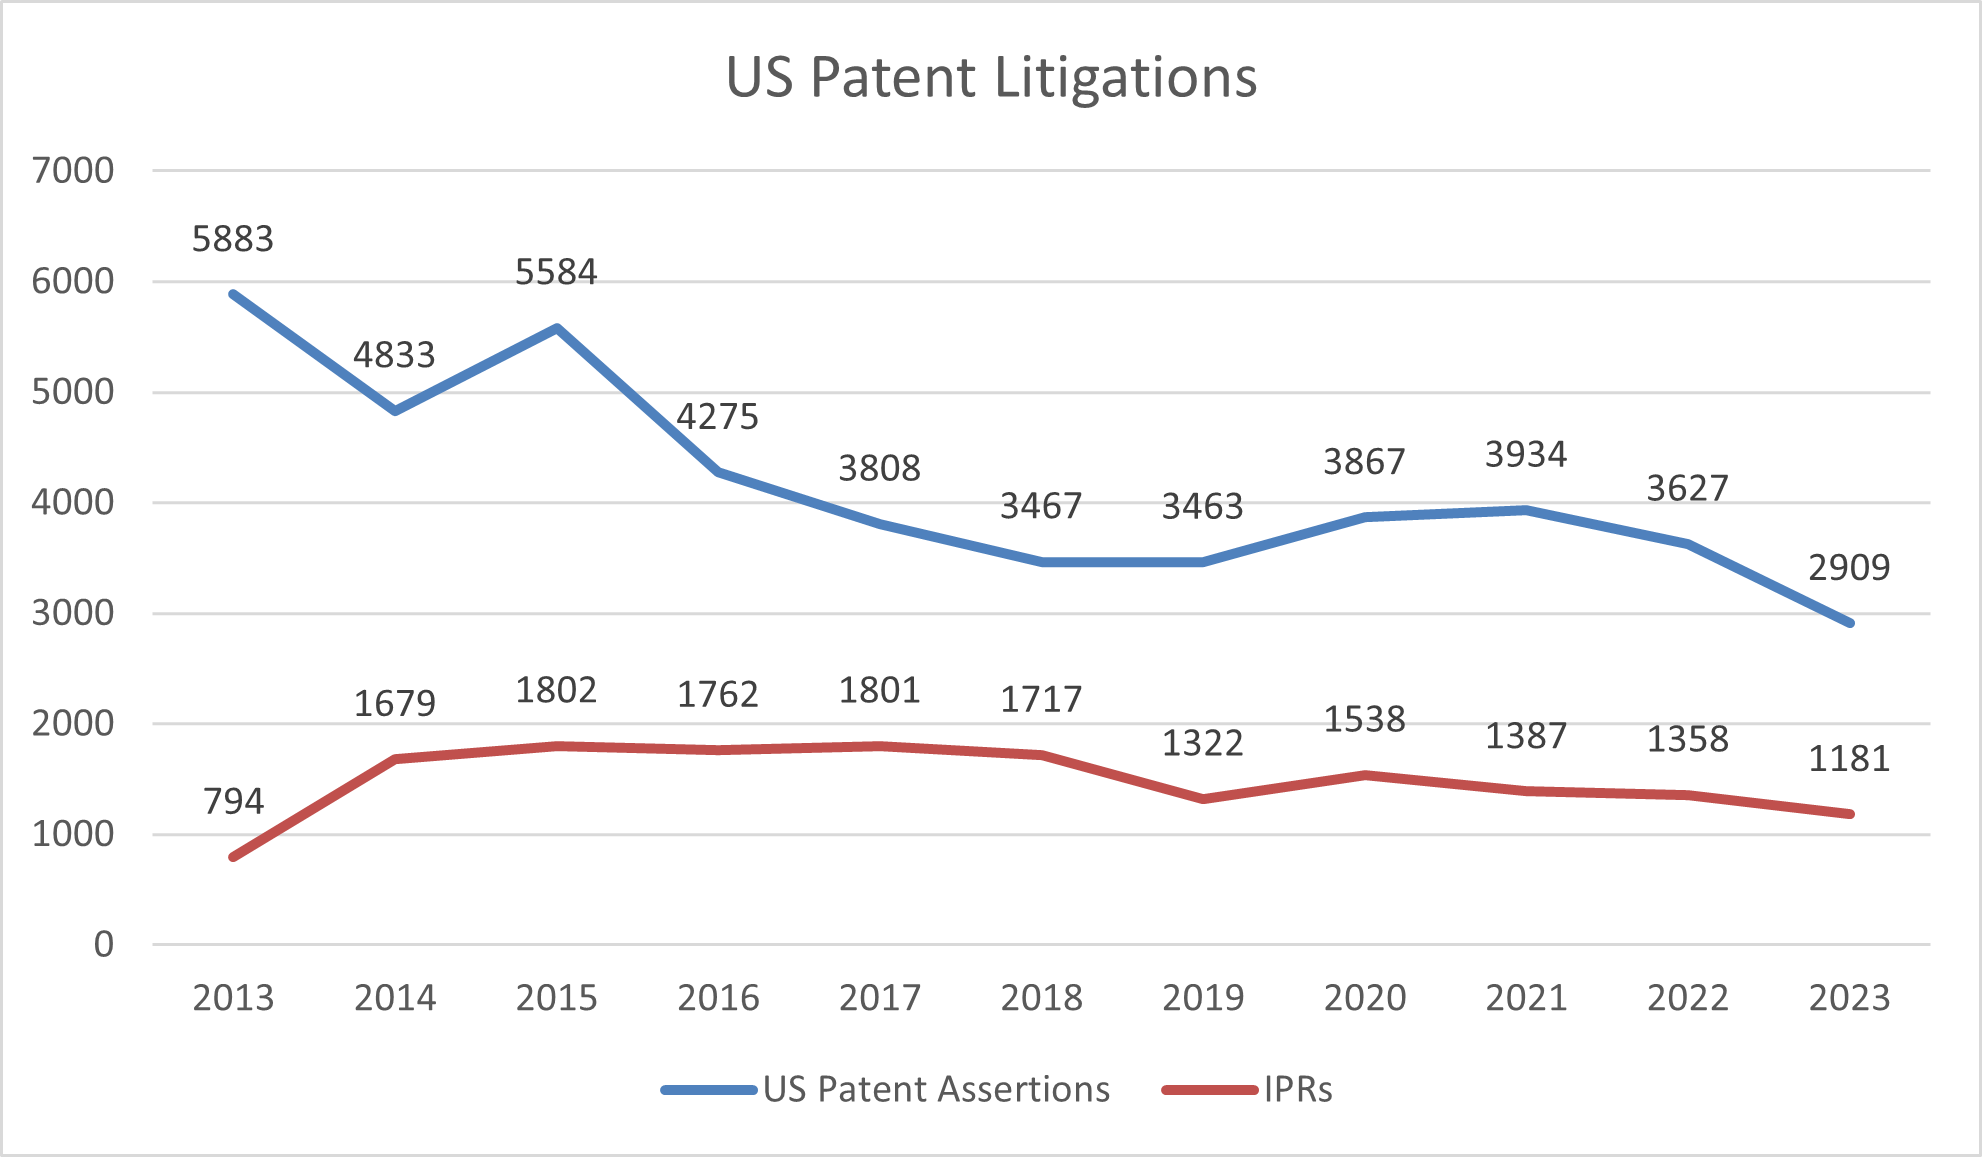 US Patent Litigations & IPR Filings